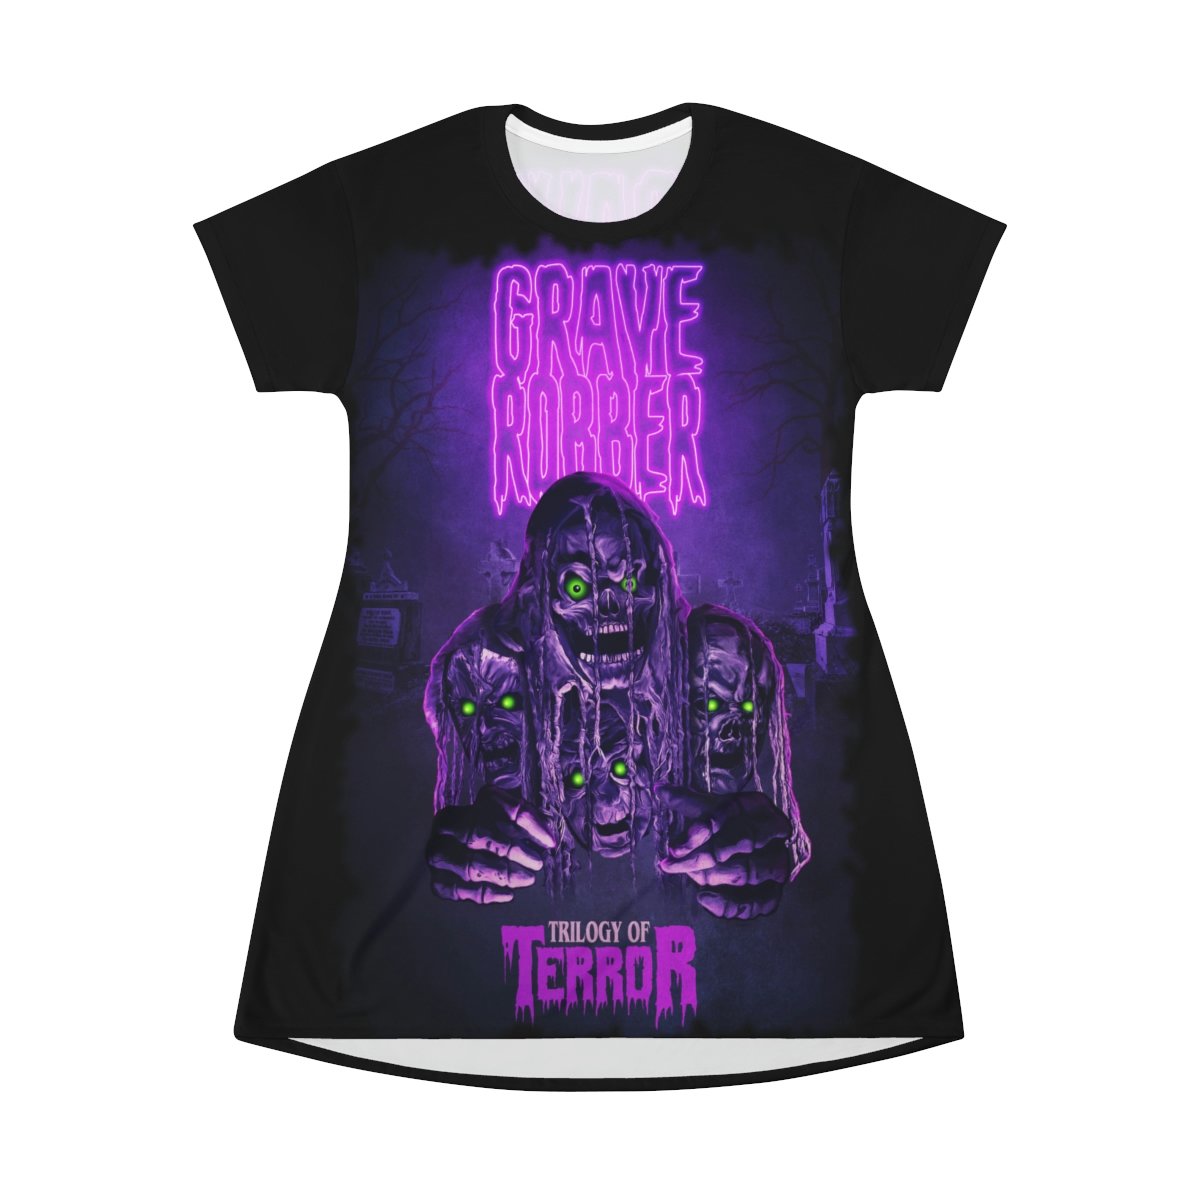 Grave Robber – Trilogy of Terror  T-shirt Dress